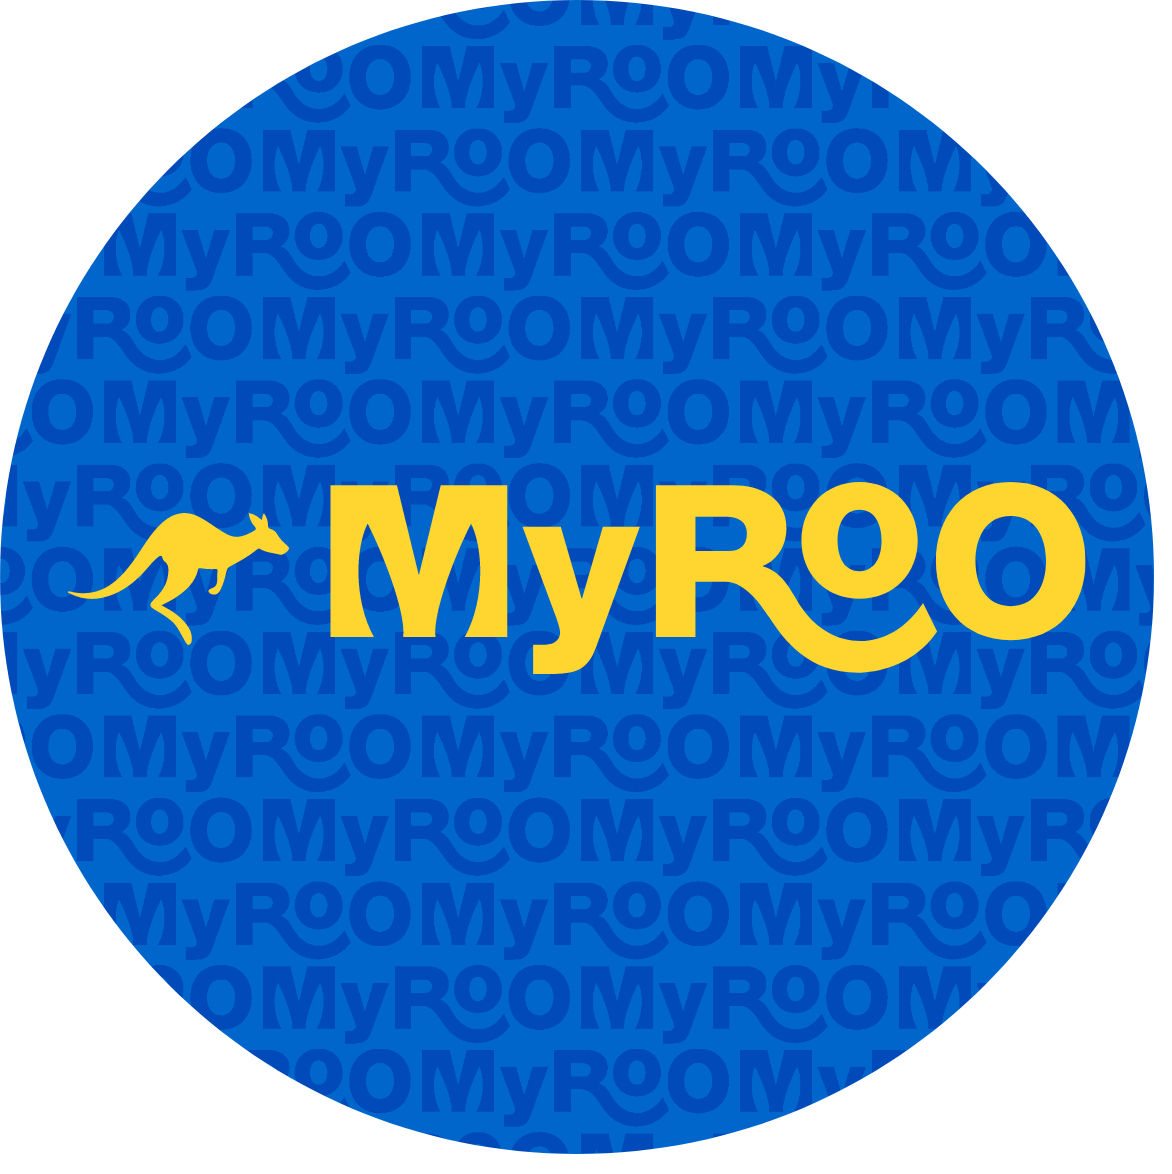 kangaroo icon with MyRoo logo